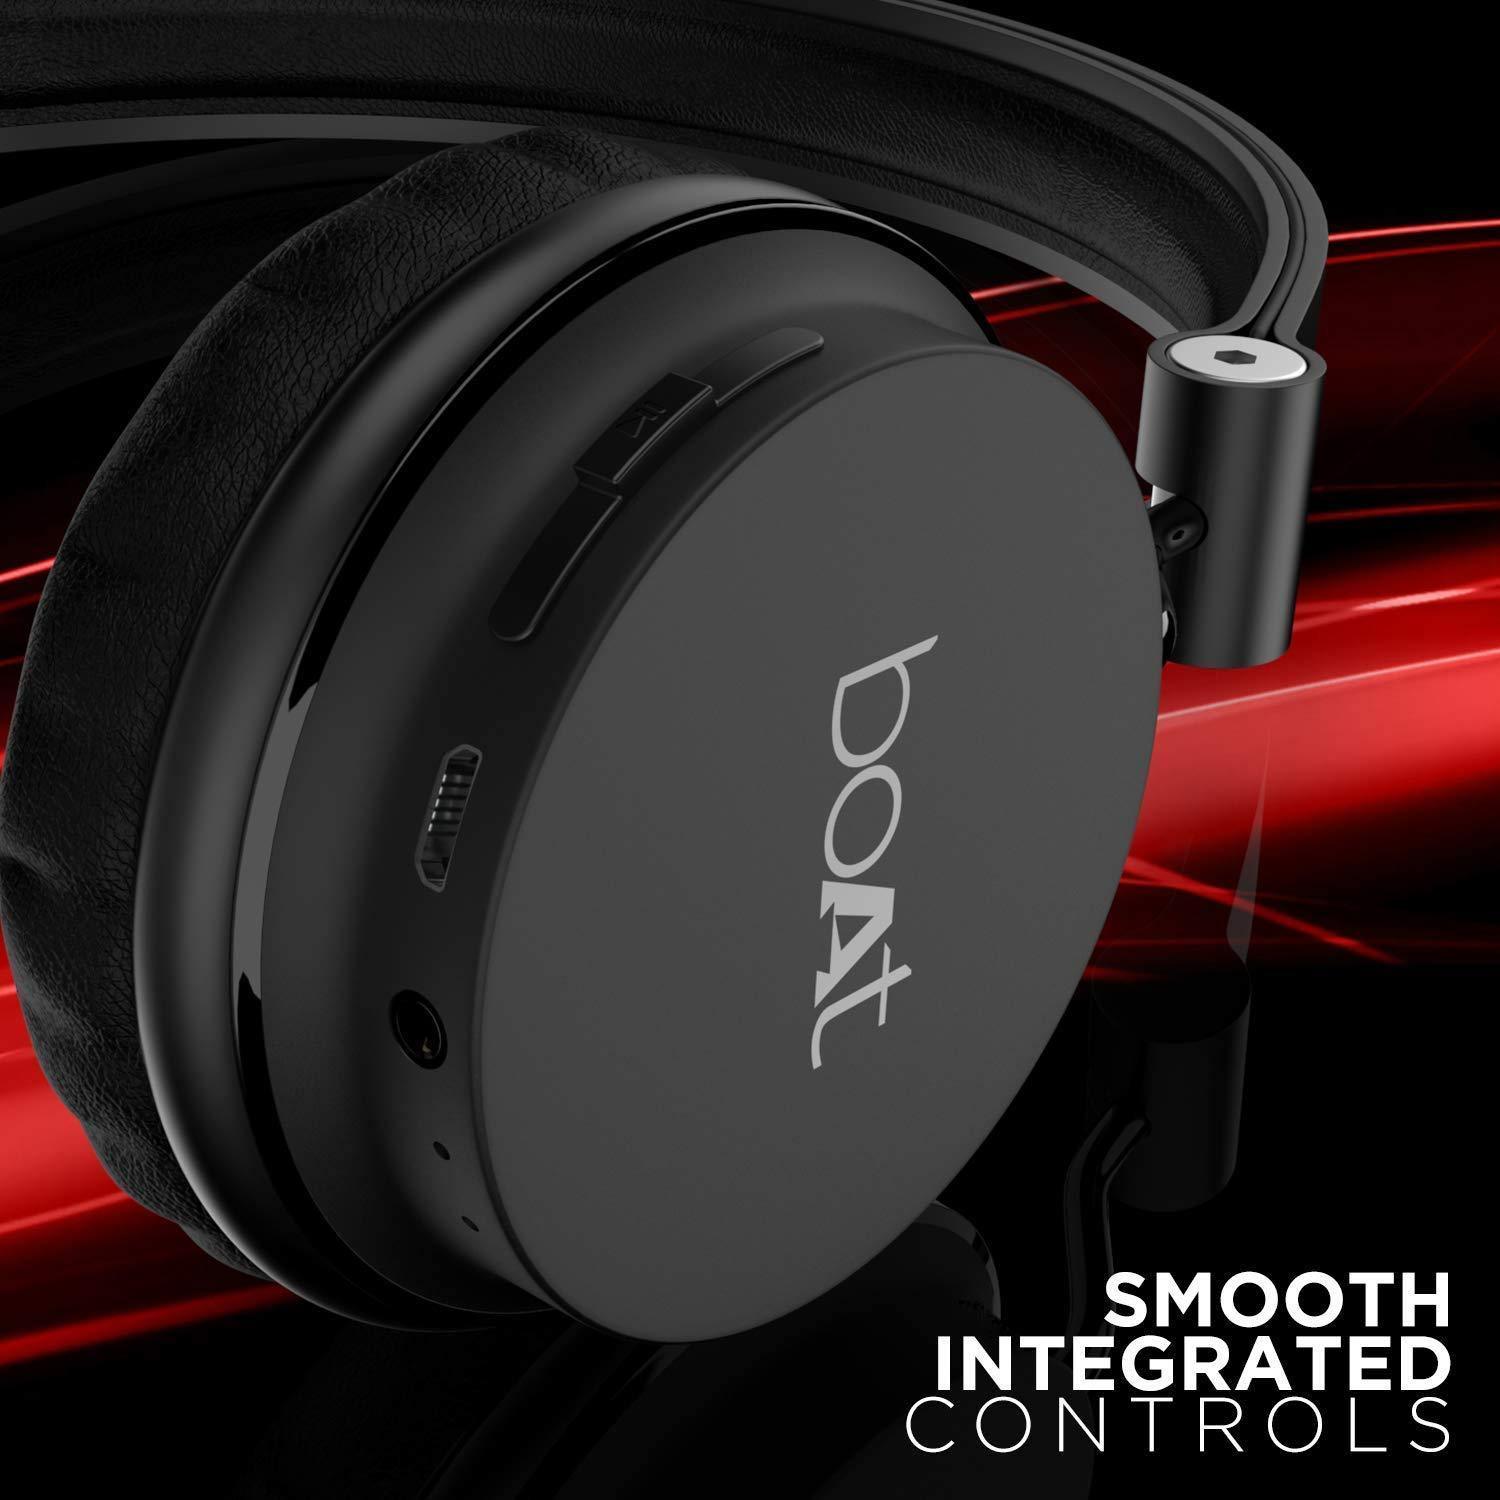 boAt Rockerz 400 Bluetooth On-Ear Headphone with Mic-Bluetooth Ear phone-dealsplant